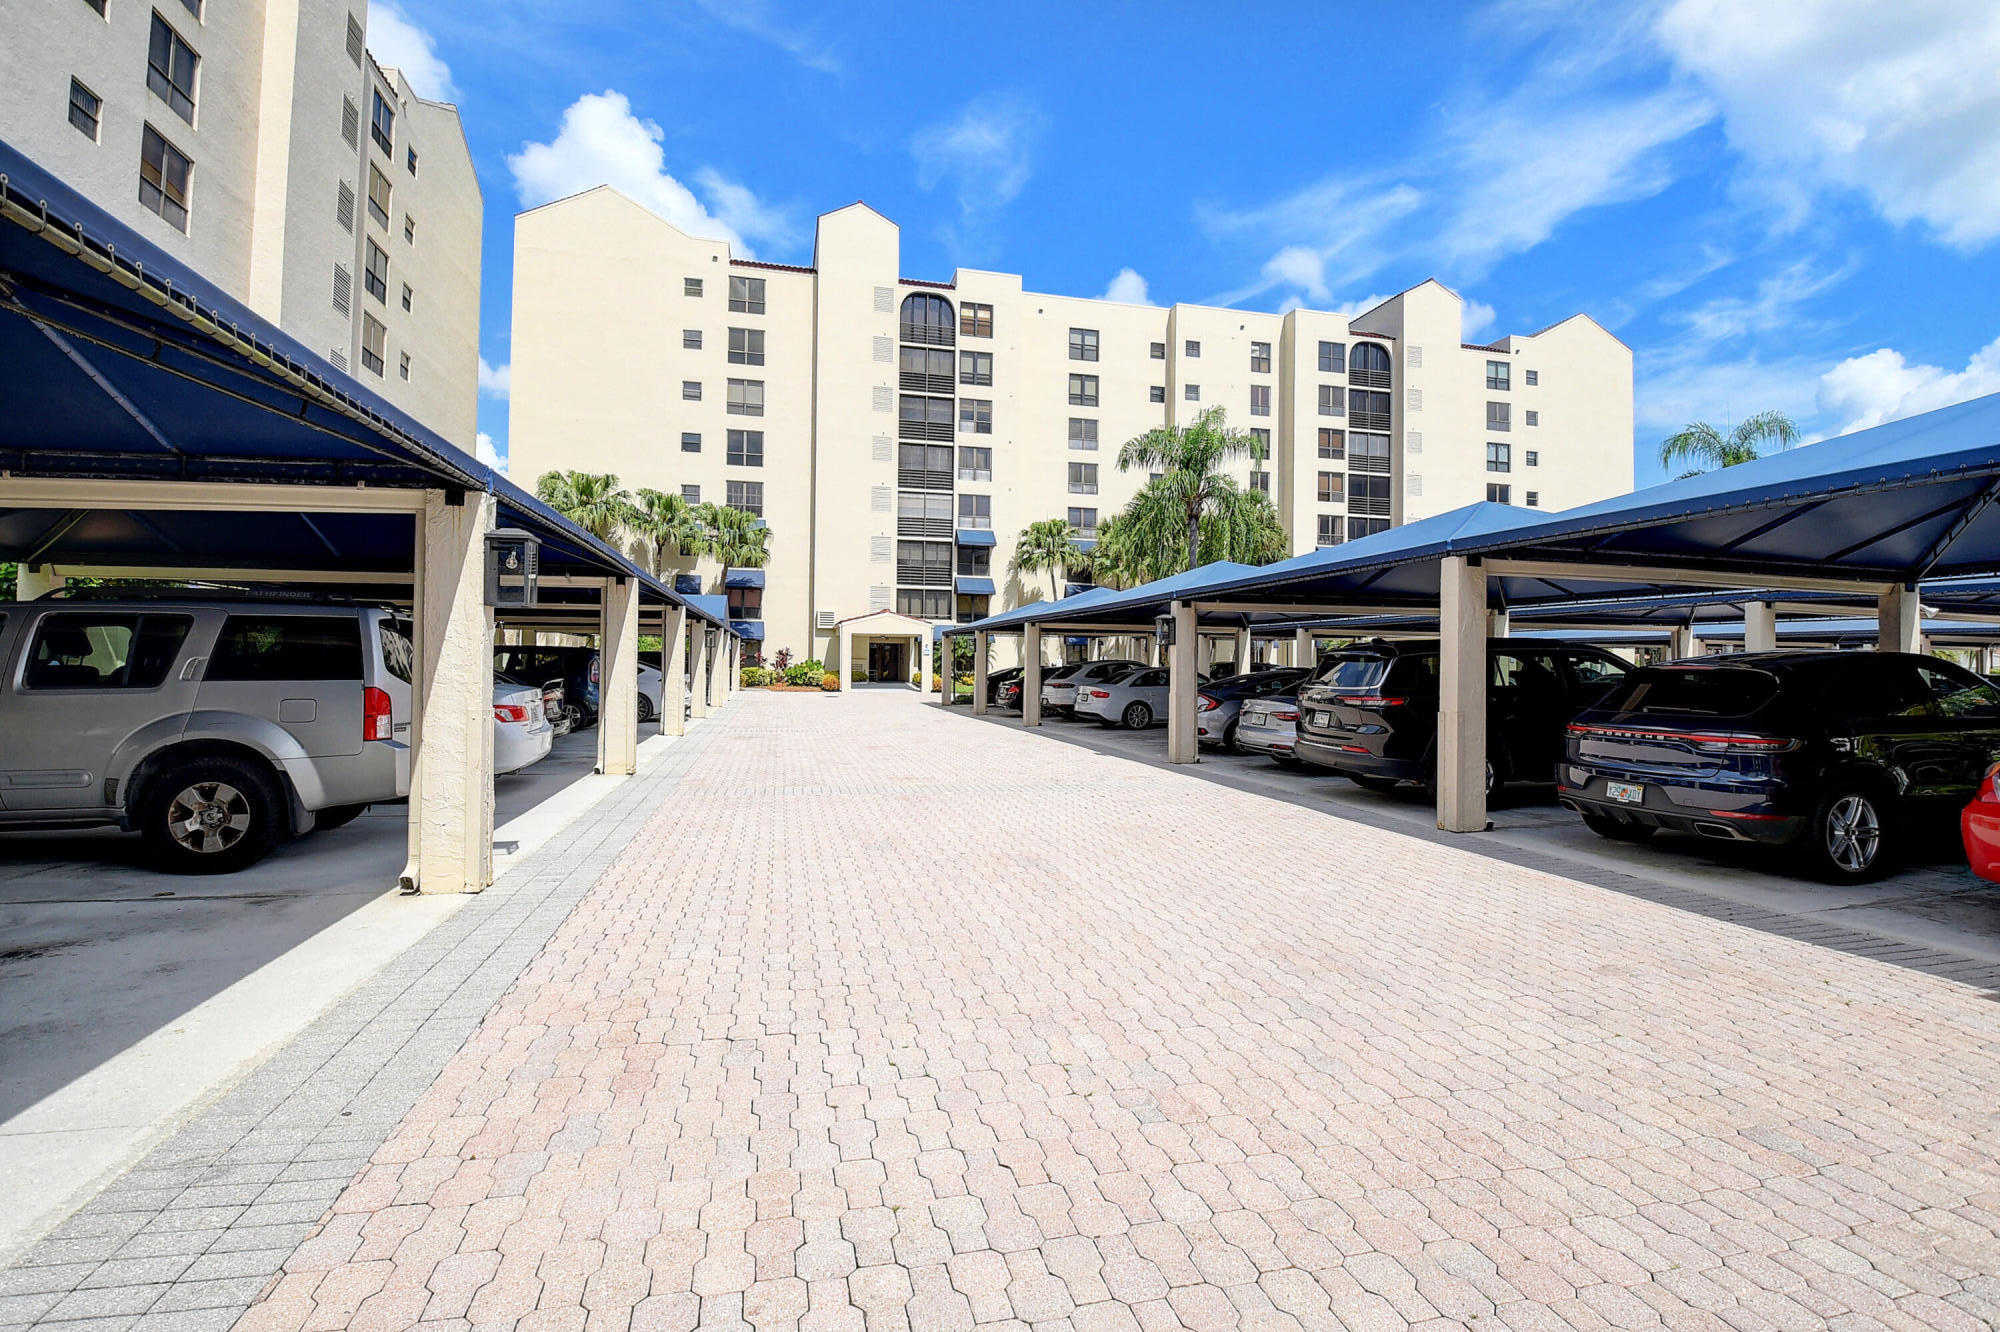 View Boca Raton, FL 33433 residential property